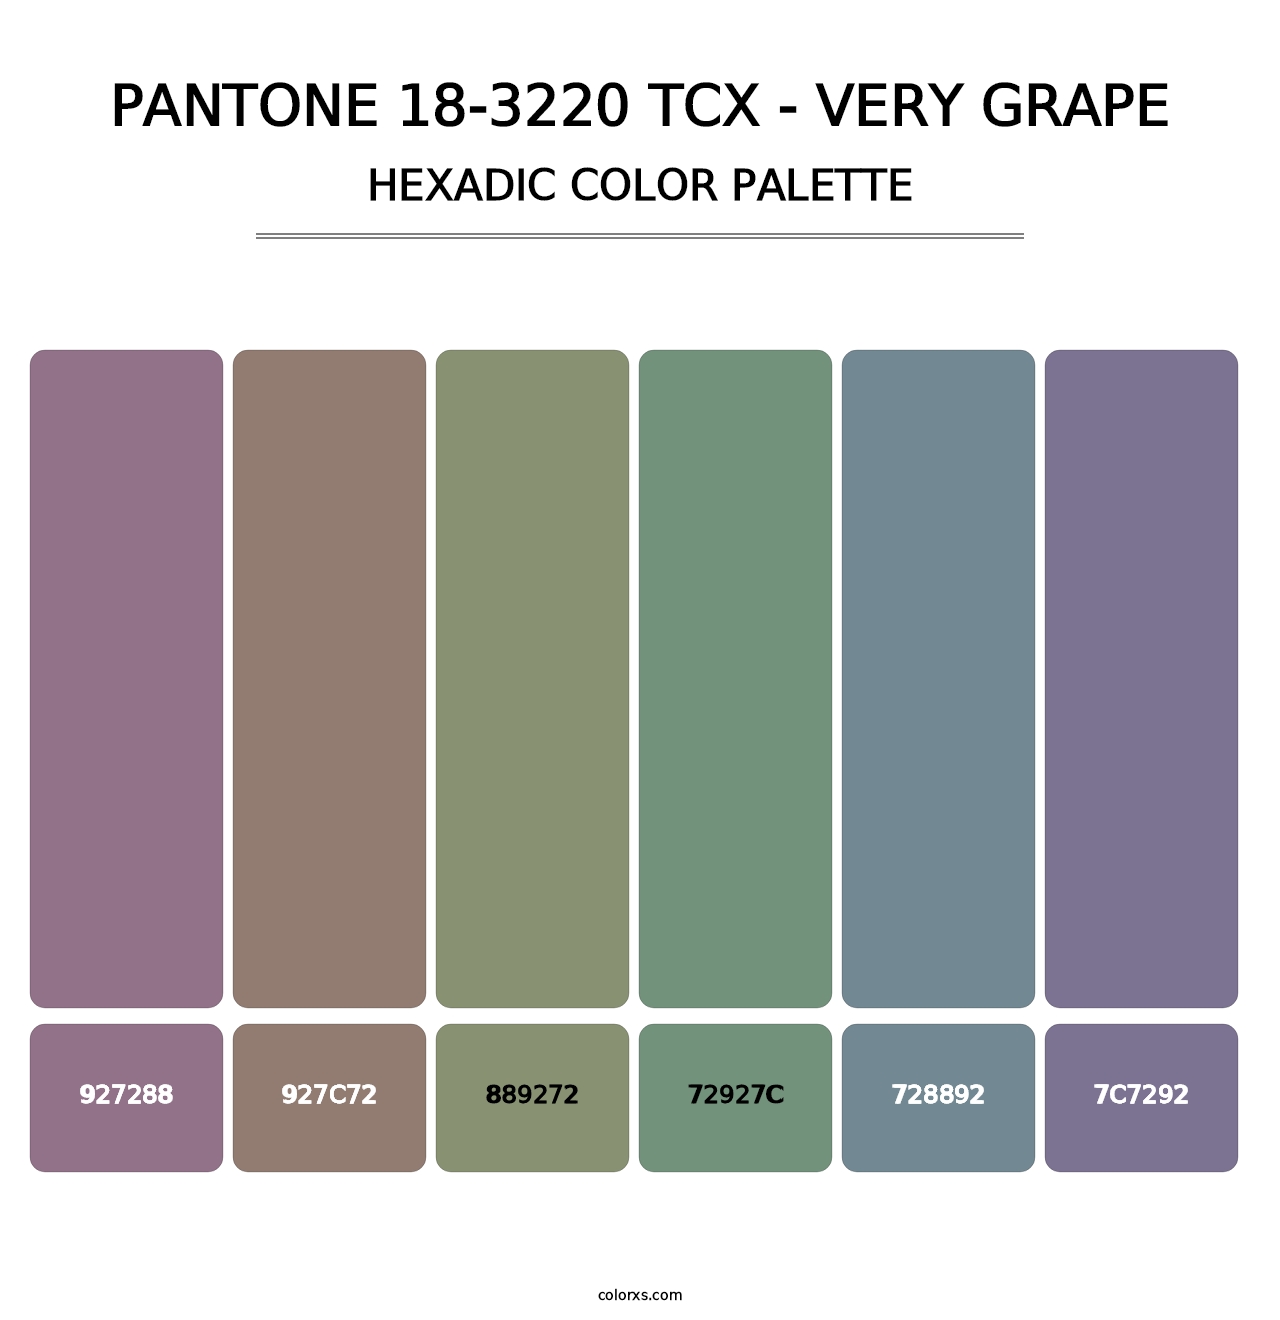 PANTONE 18-3220 TCX - Very Grape - Hexadic Color Palette